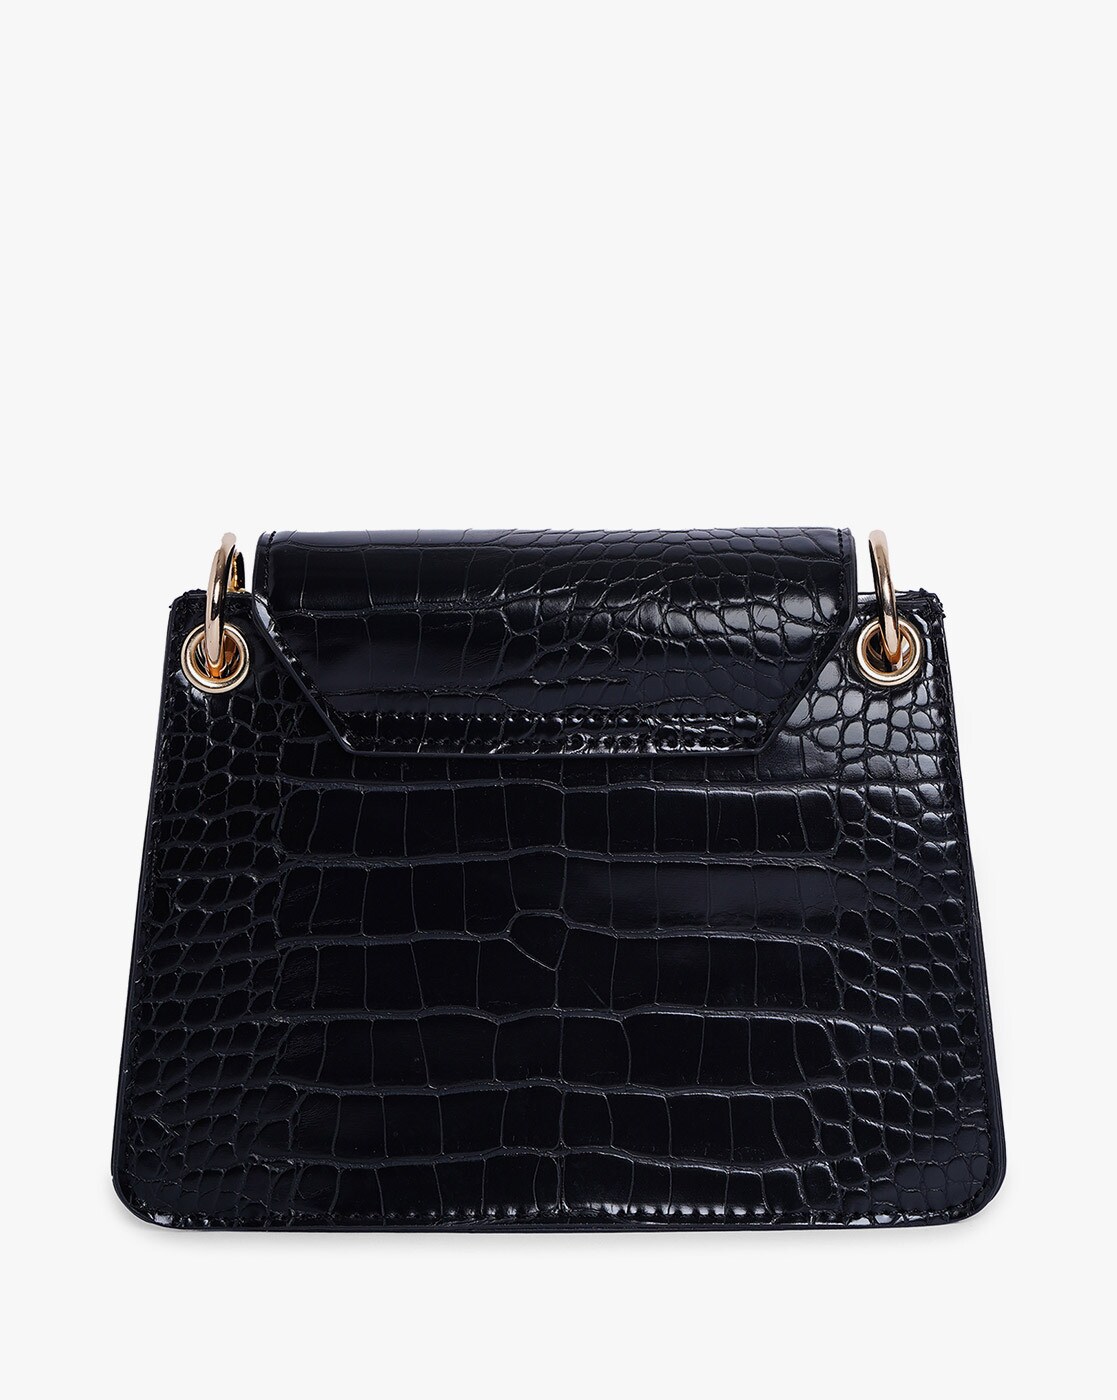 Womens Handbag NOATD #8831628 Purse, Magnetic Clasp, Brown Basket, Black  Reptile